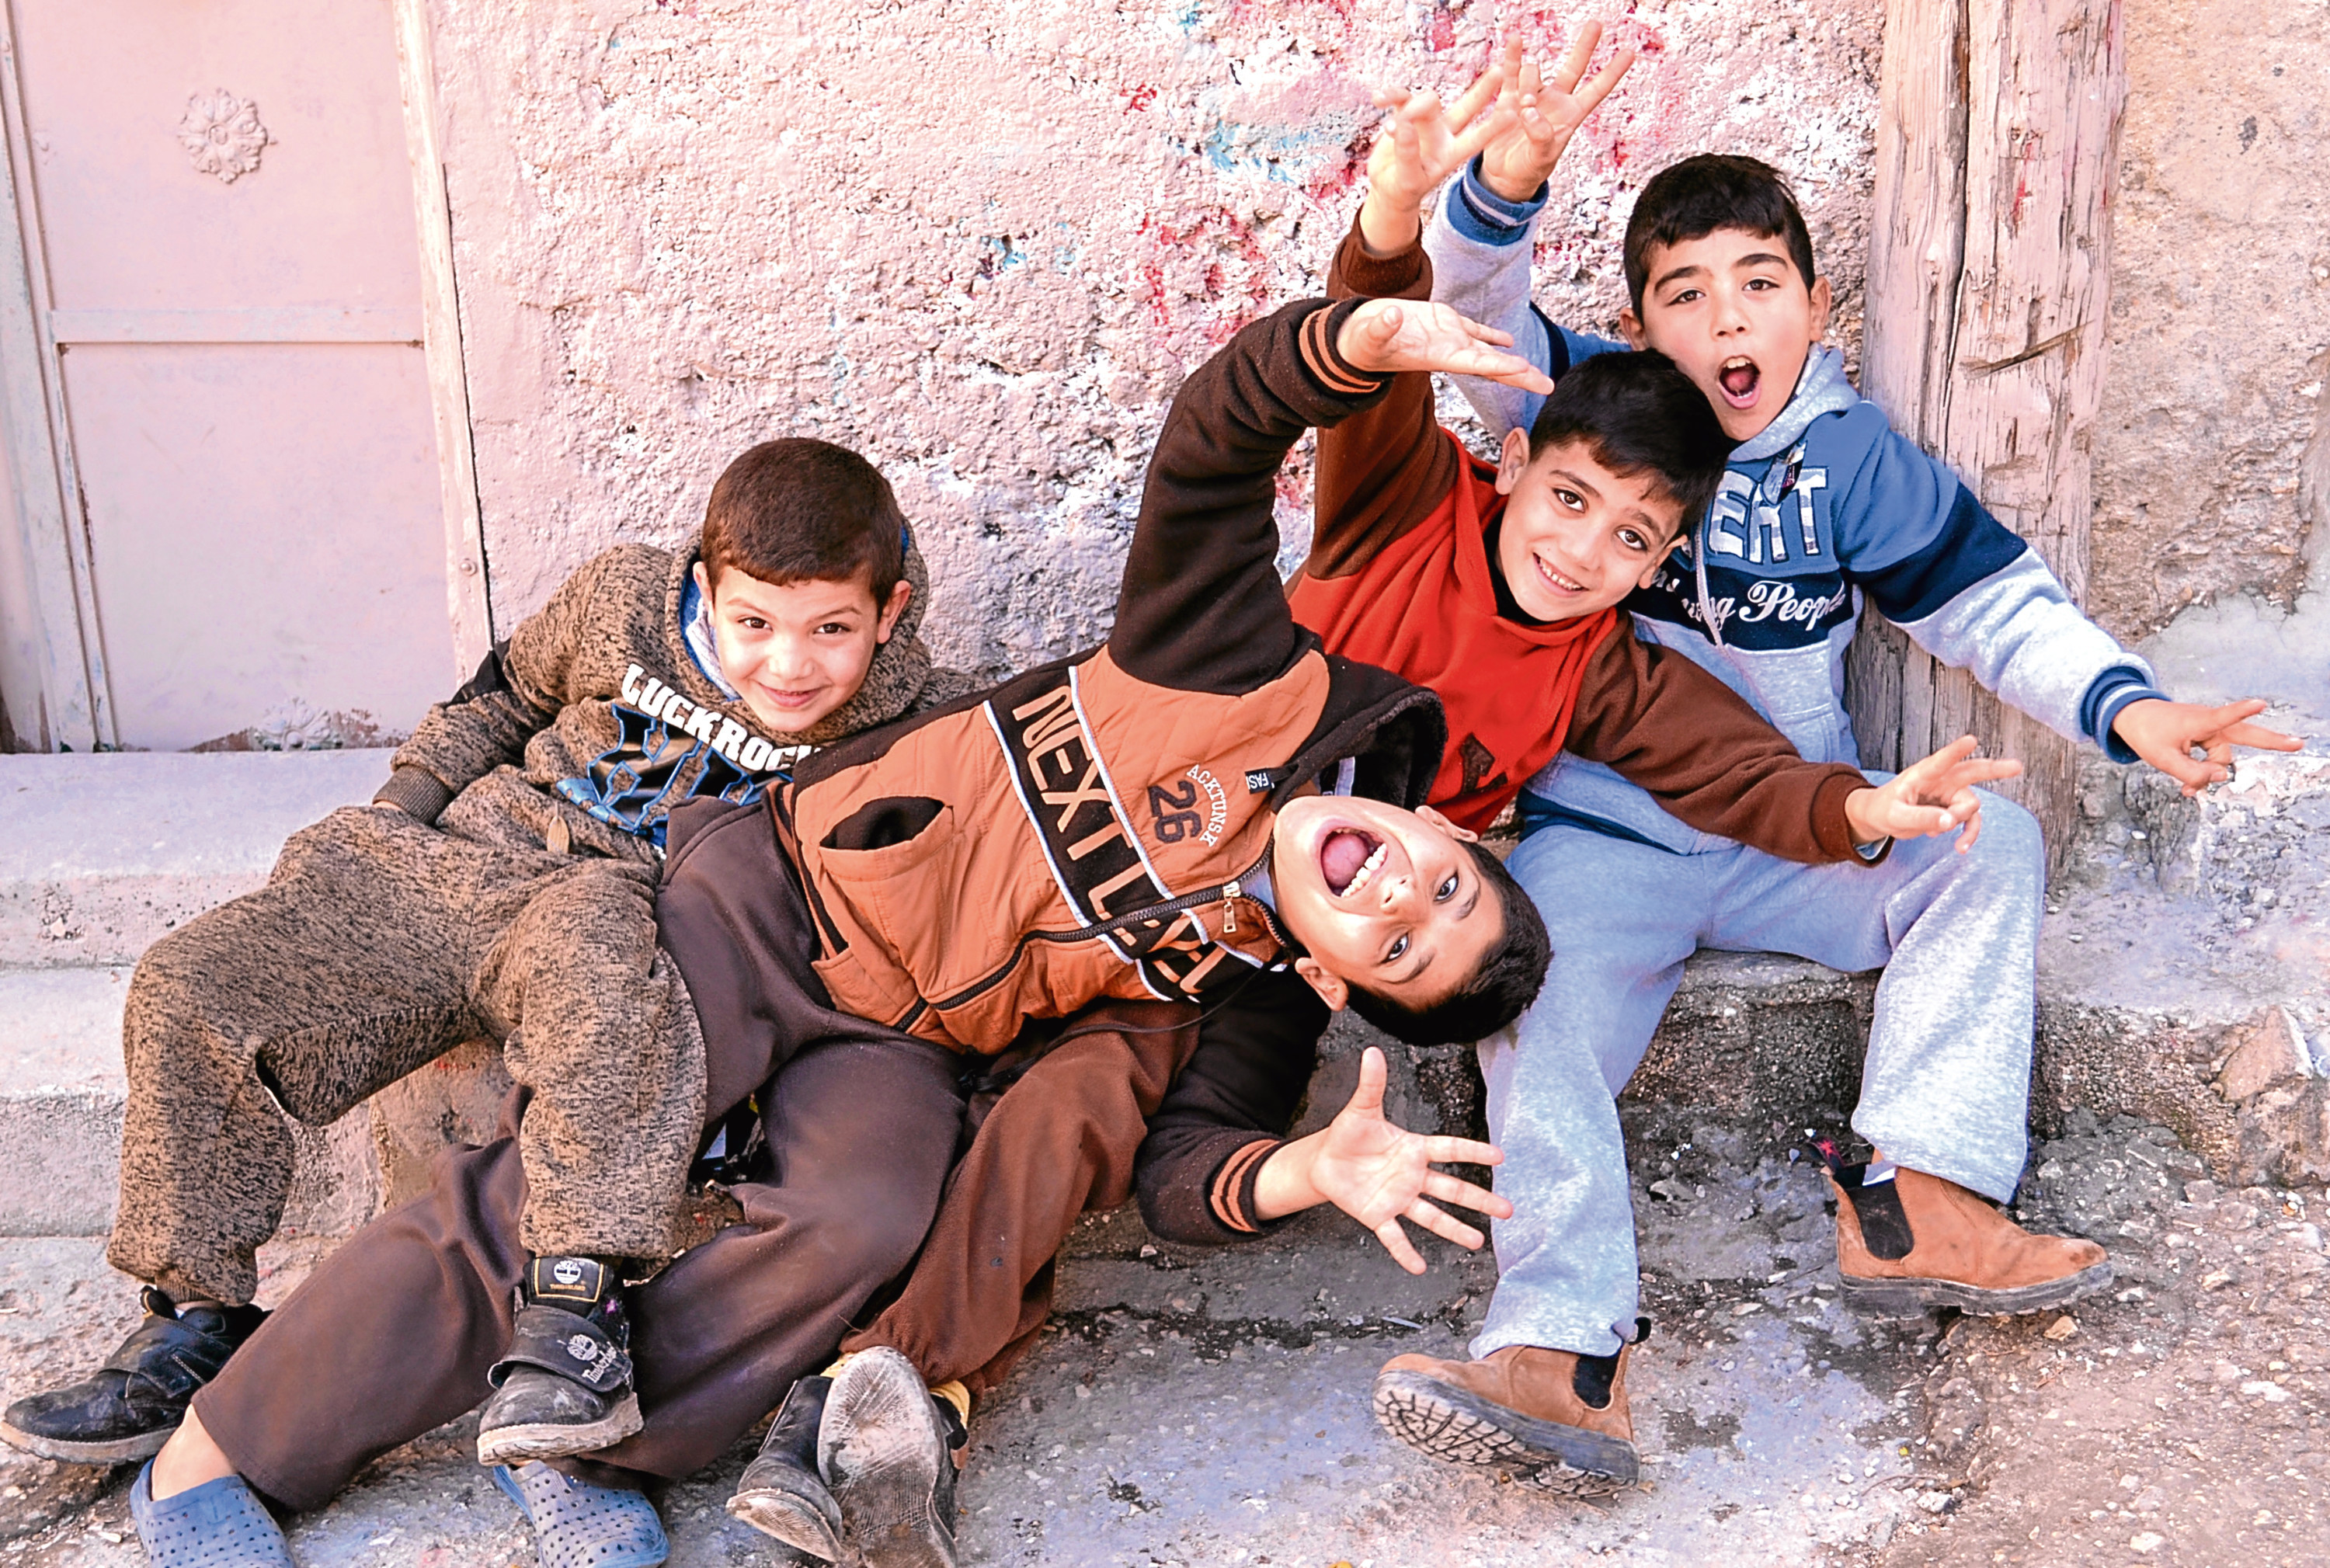 Children in Dheisheh camp